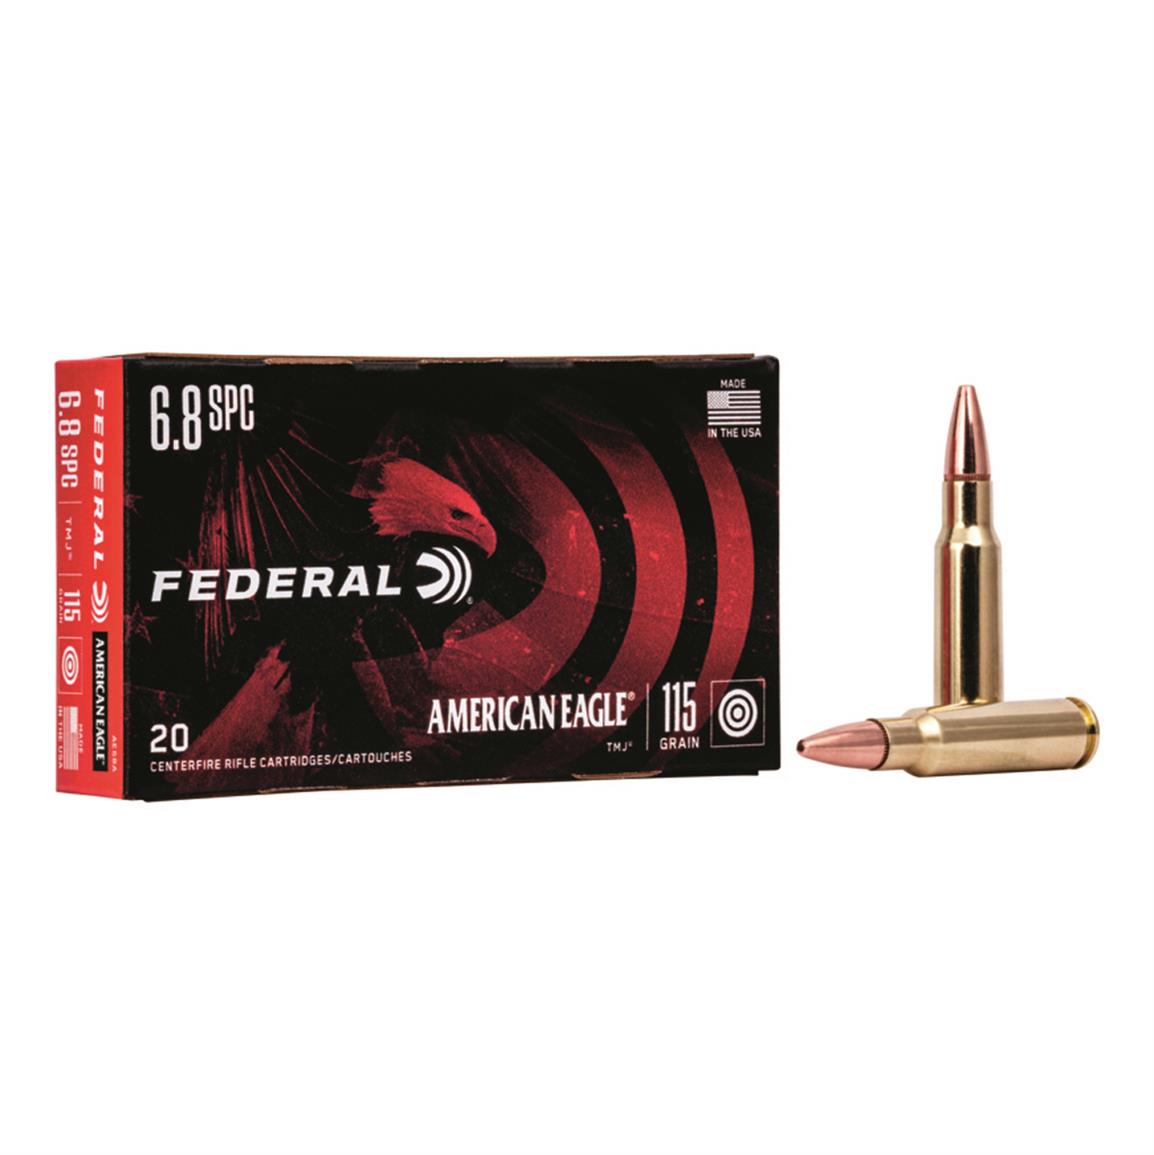 Federal American Eagle 6.8 Remington SPC Ammo, FMJ, 115 Grain, 20 Rounds